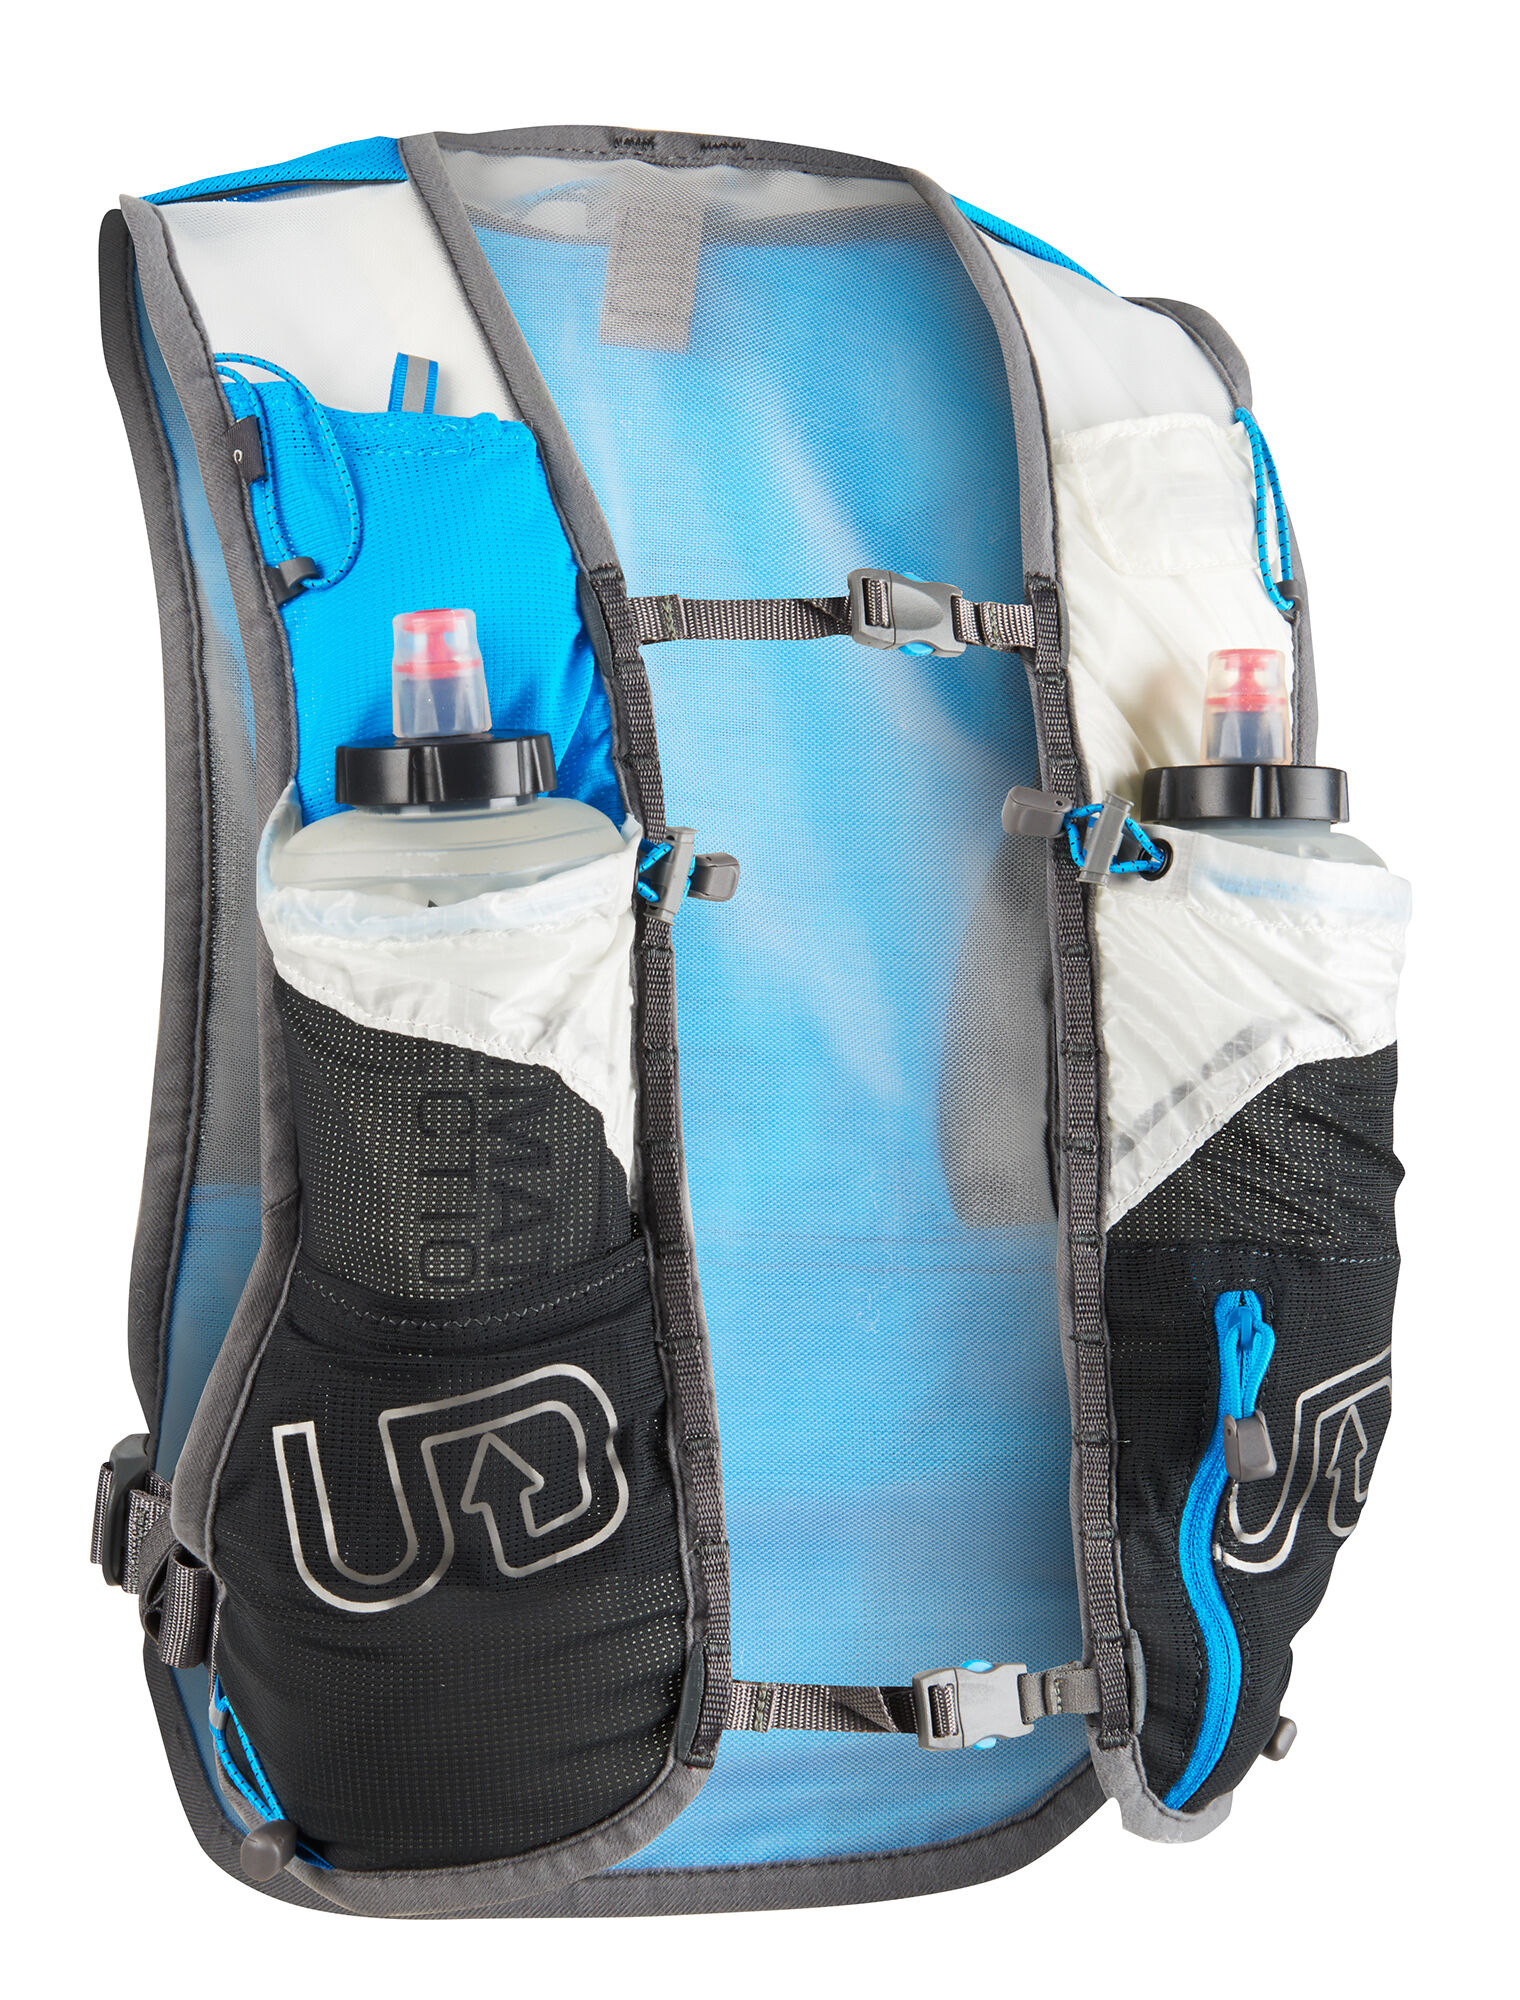 Ultimate Direction - SJ Ultra Vest 3.0 - Trail running backpack - Men's